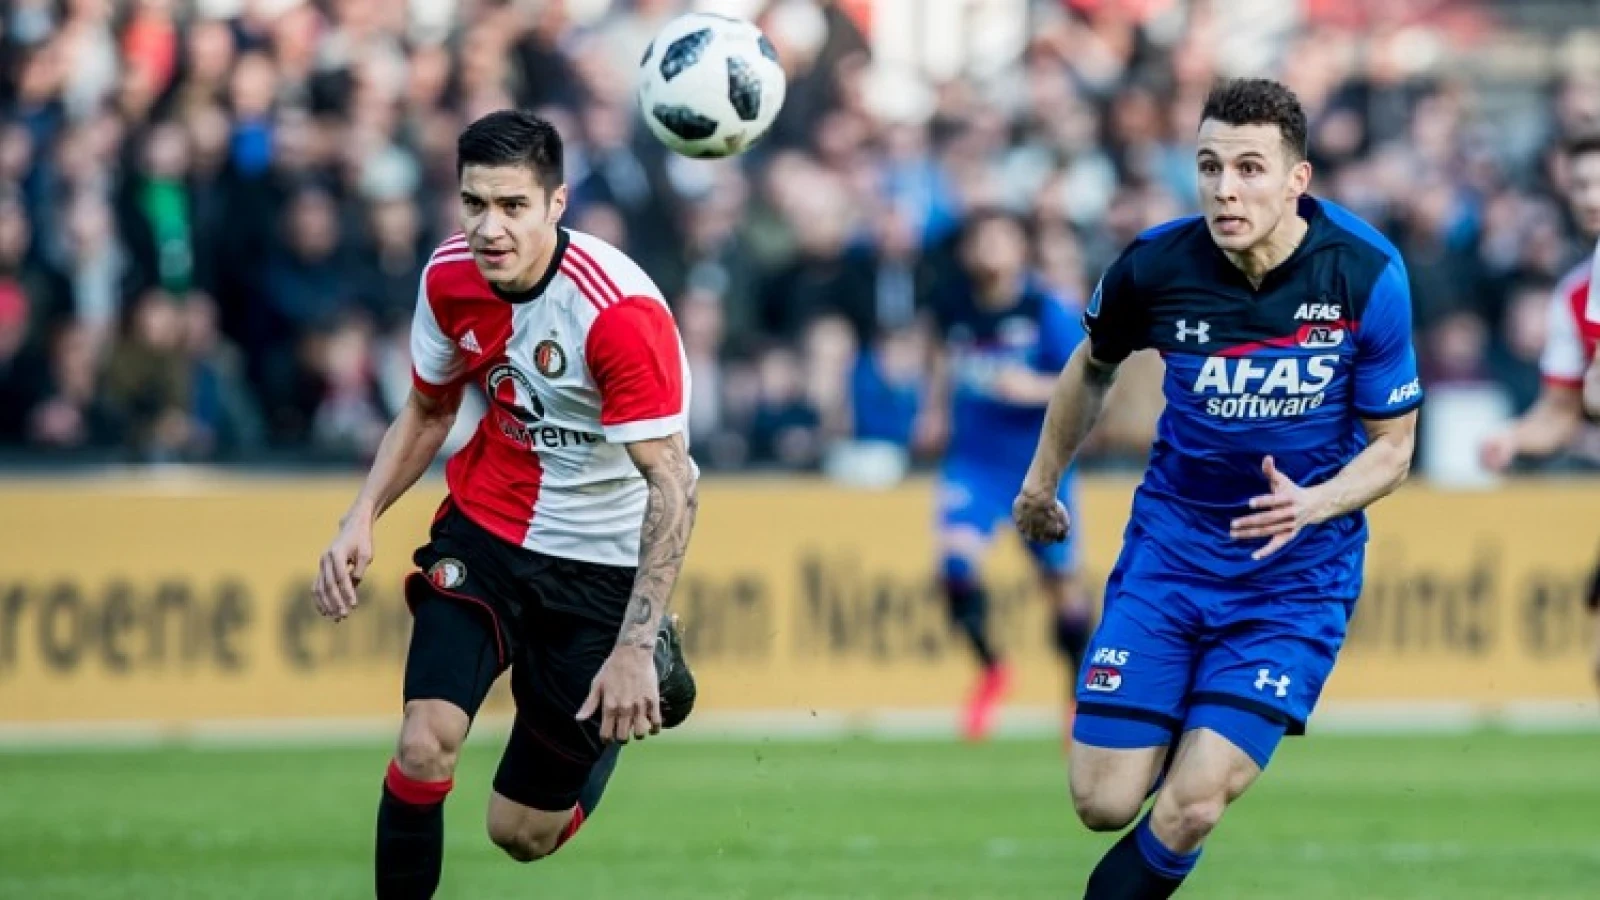 LIVE | Feyenoord - AZ 2-1 | Einde wedstrijd